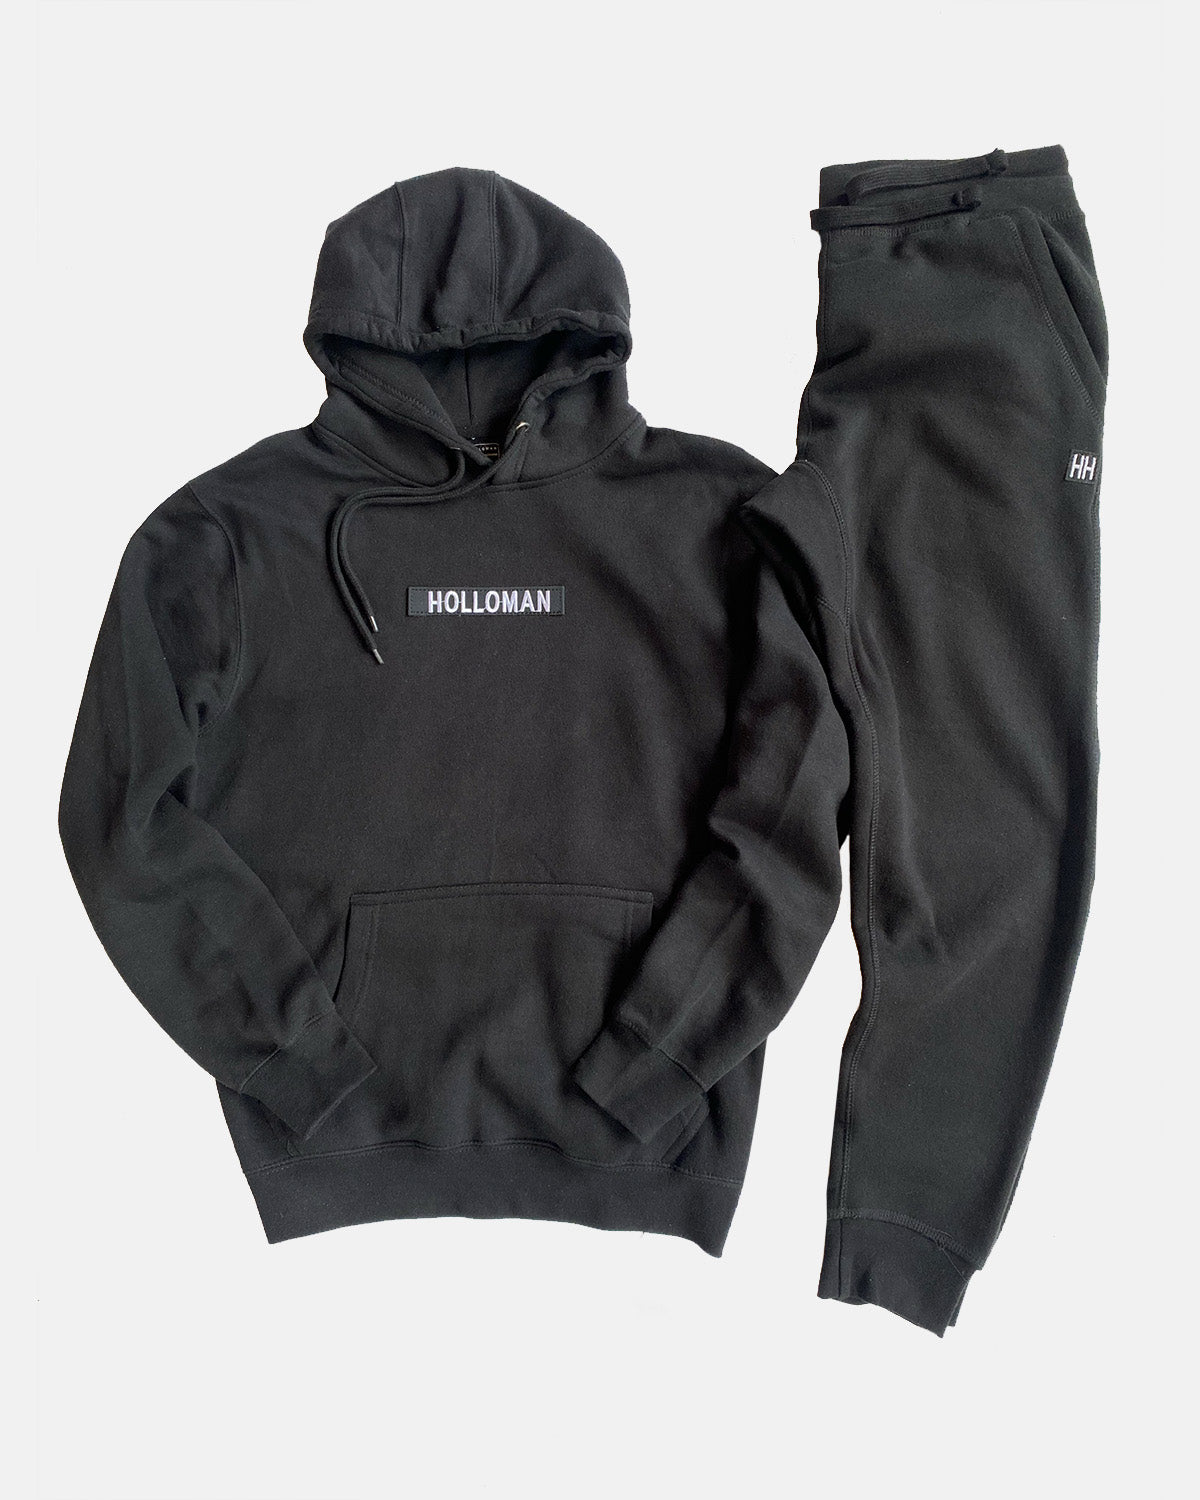 Holloman solid black sweatsuit